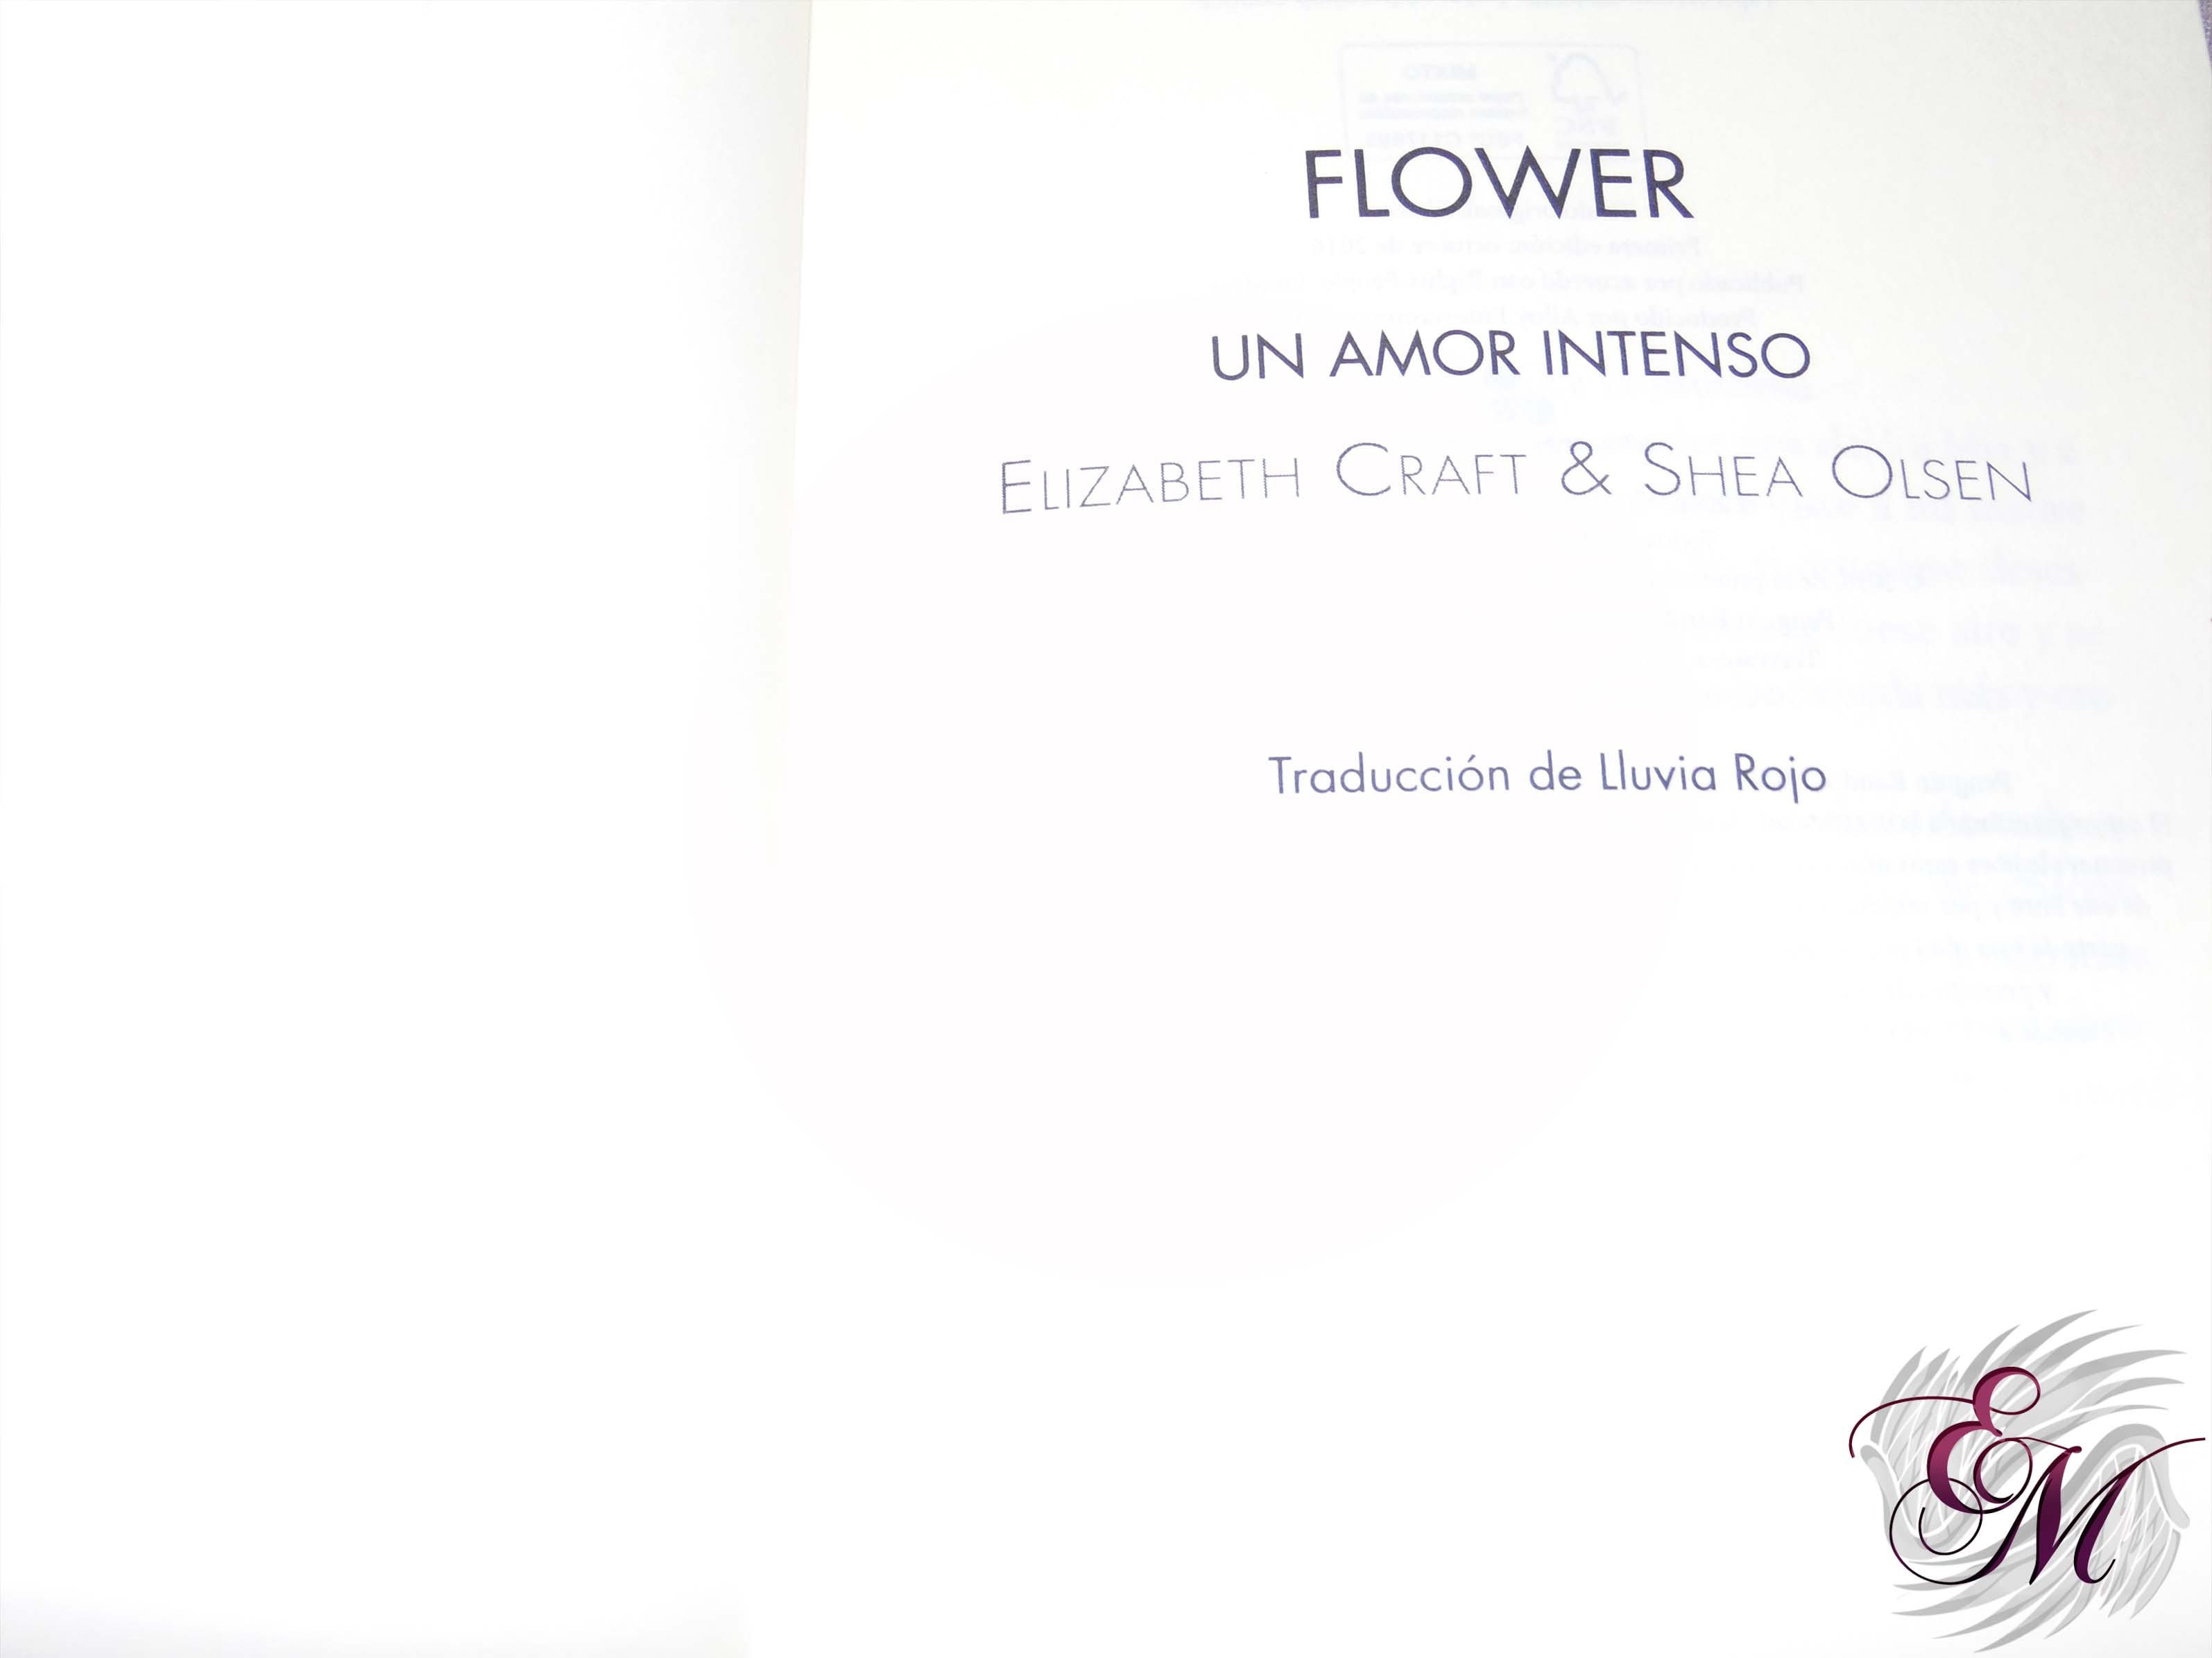 Flower un amor intenso, de Elisabeth Craft y Shea Olsen